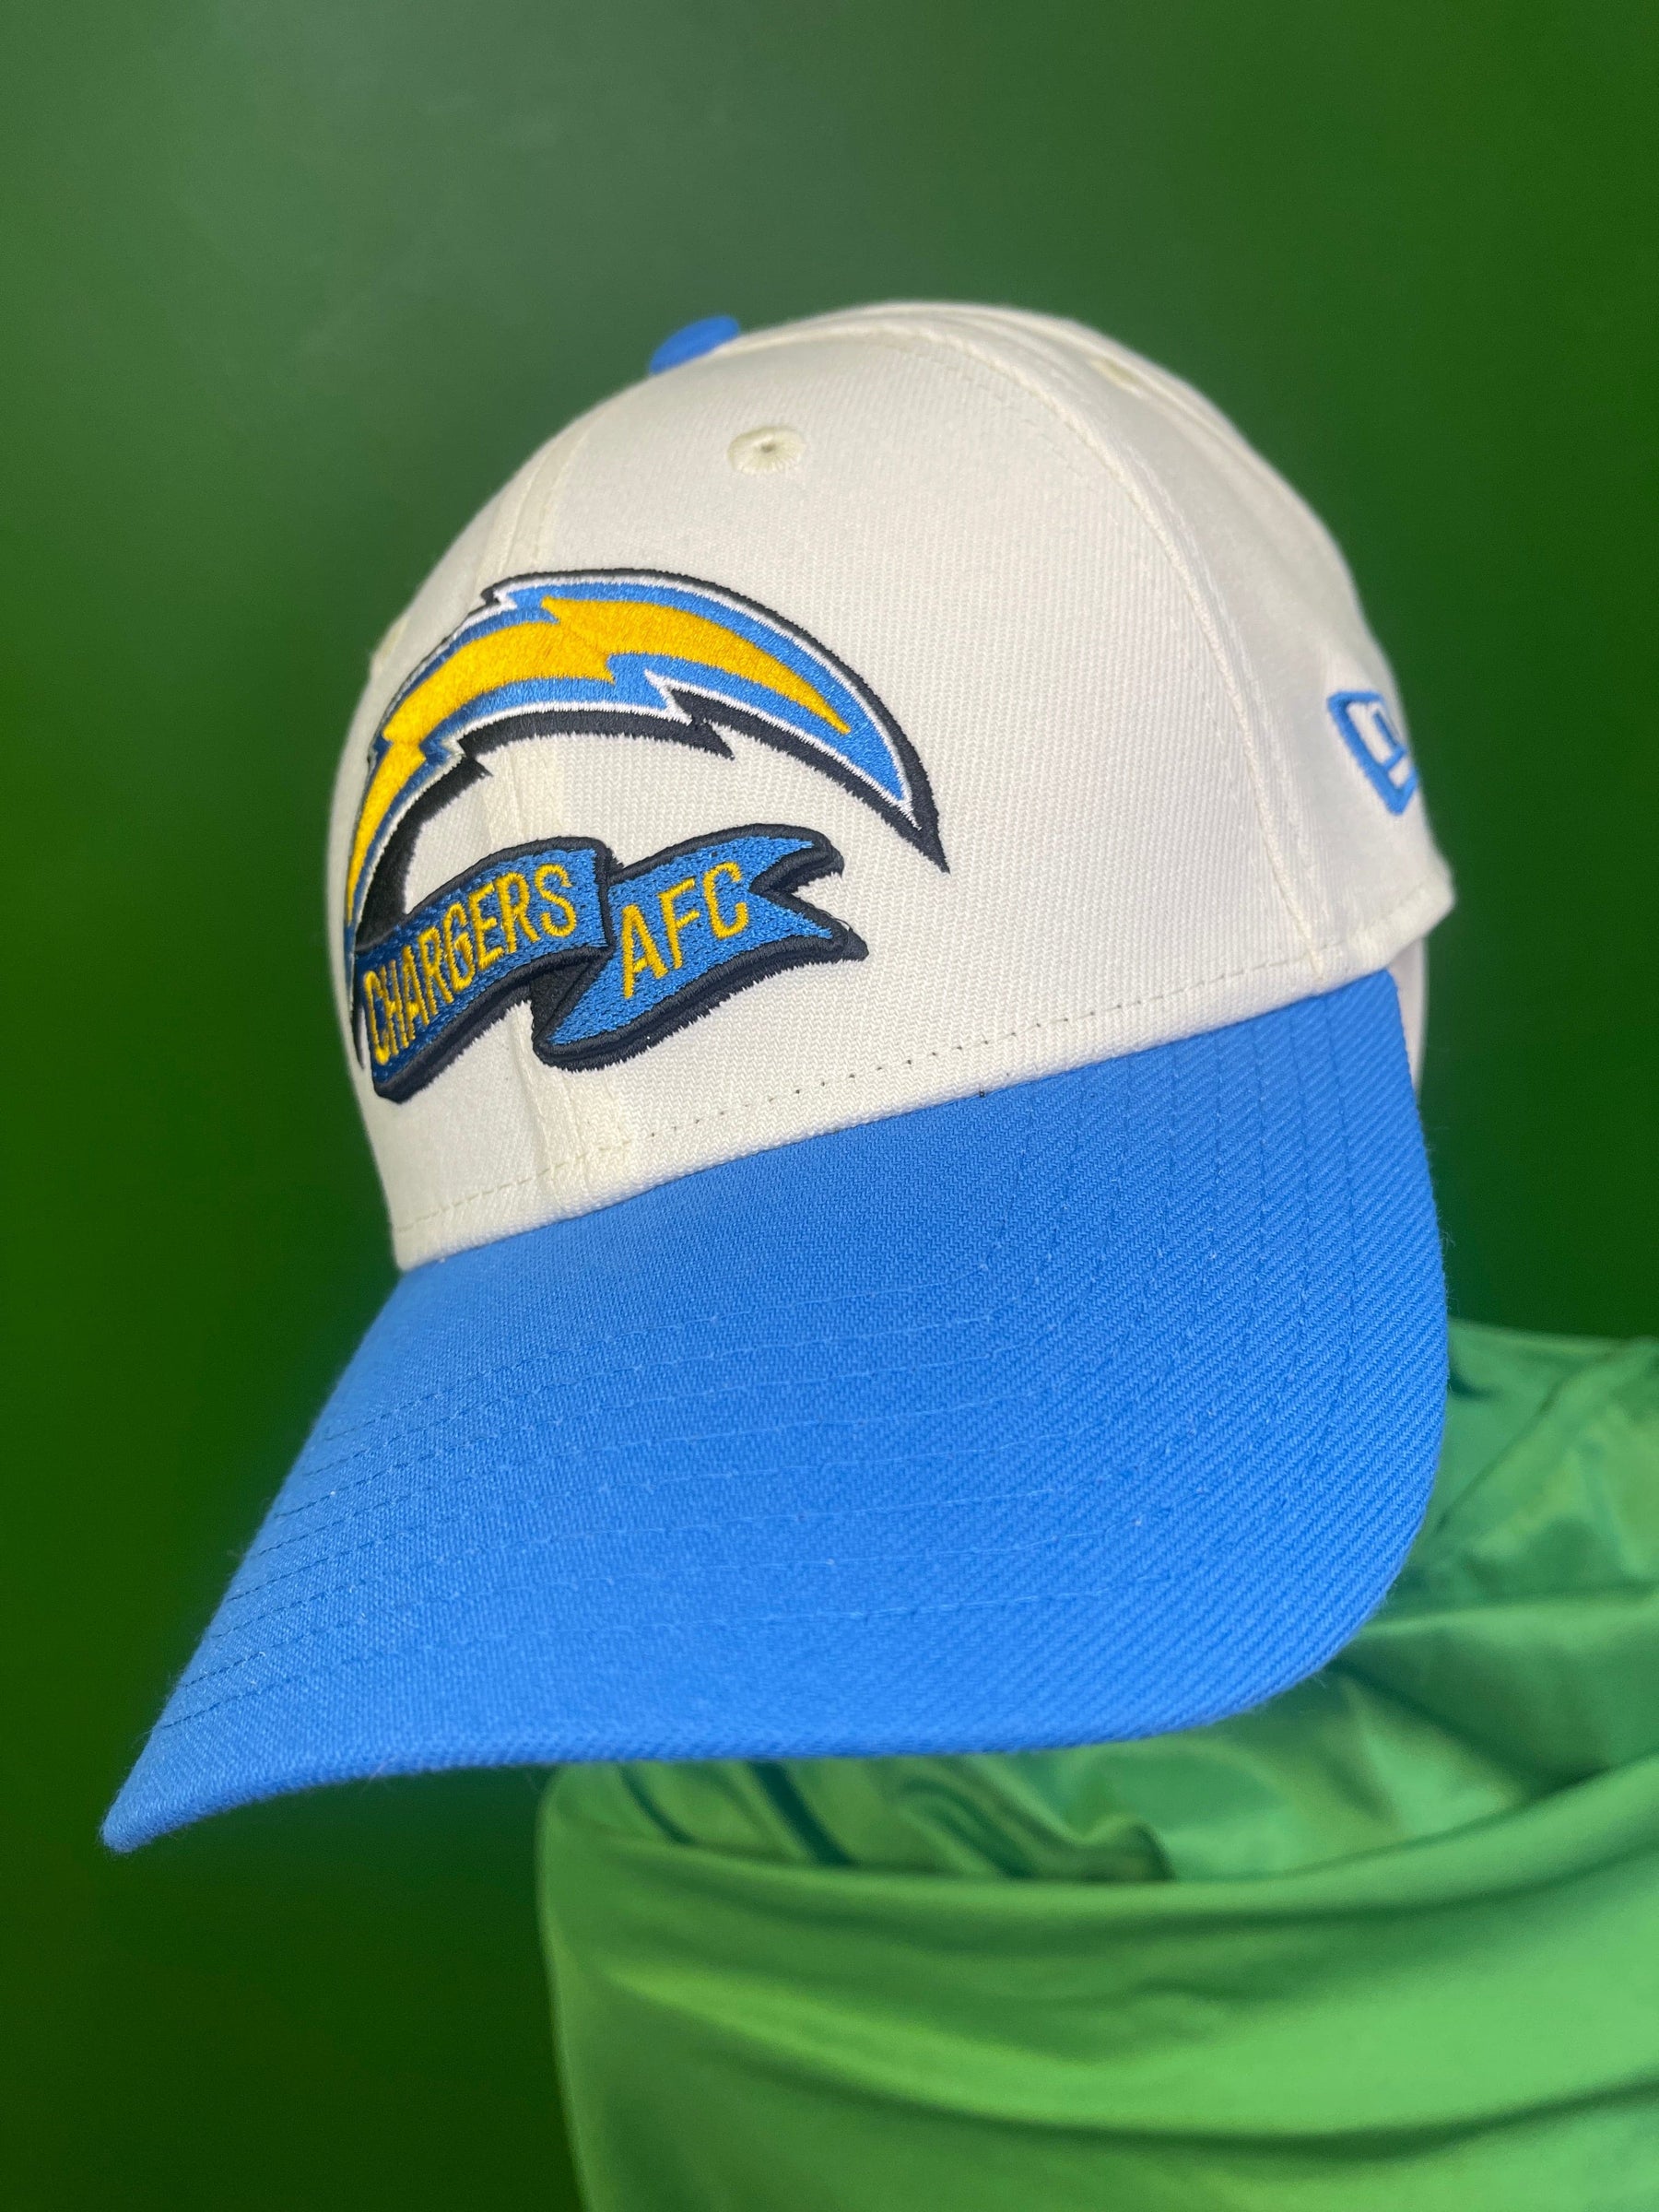 NFL Los Angeles Chargers New Era 39THIRTY Cream Hat / Cap Small-Medium